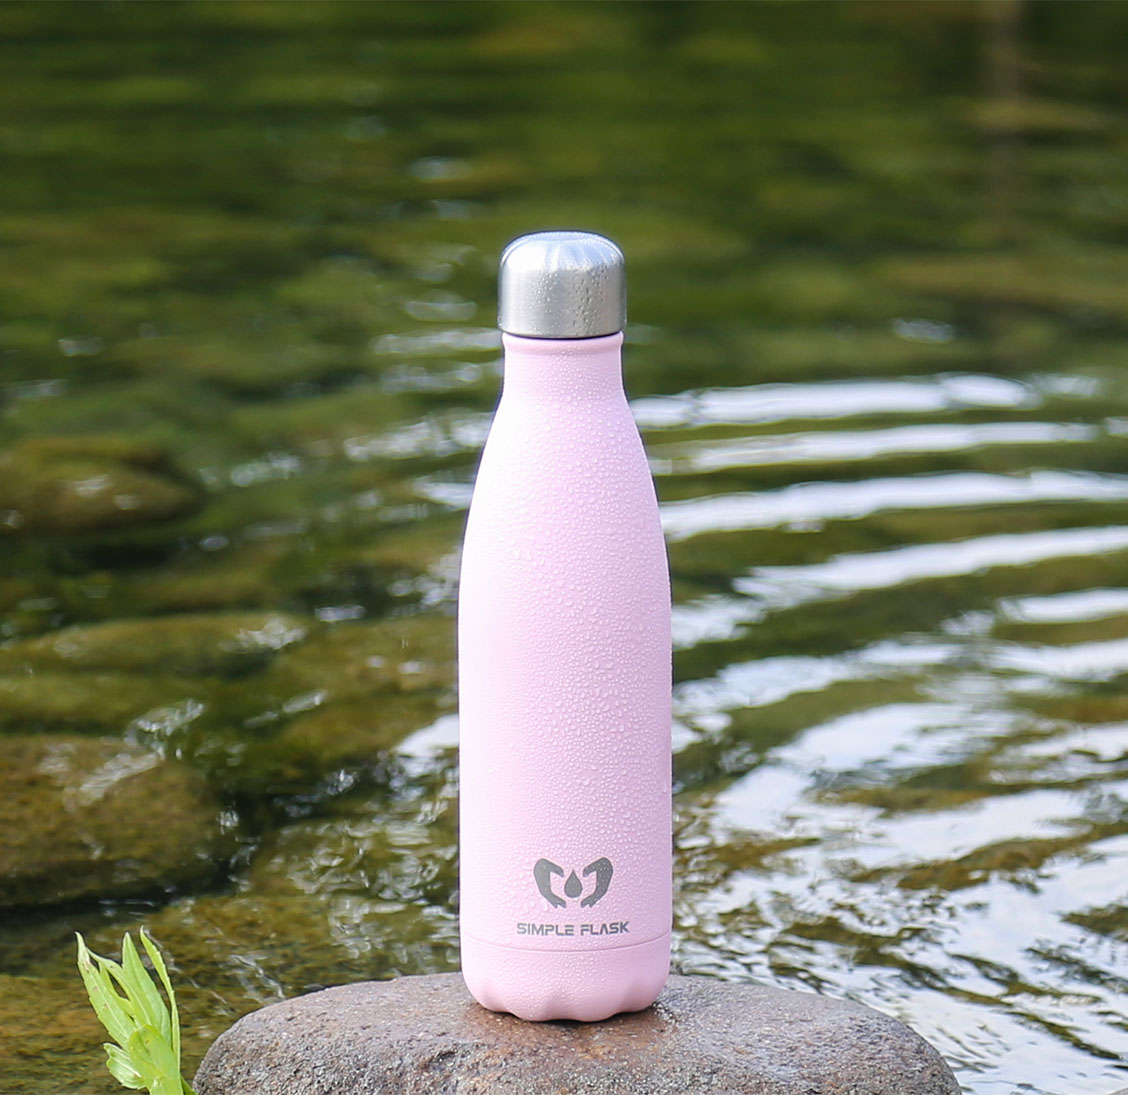 Simple Flask stainless steel water bottle